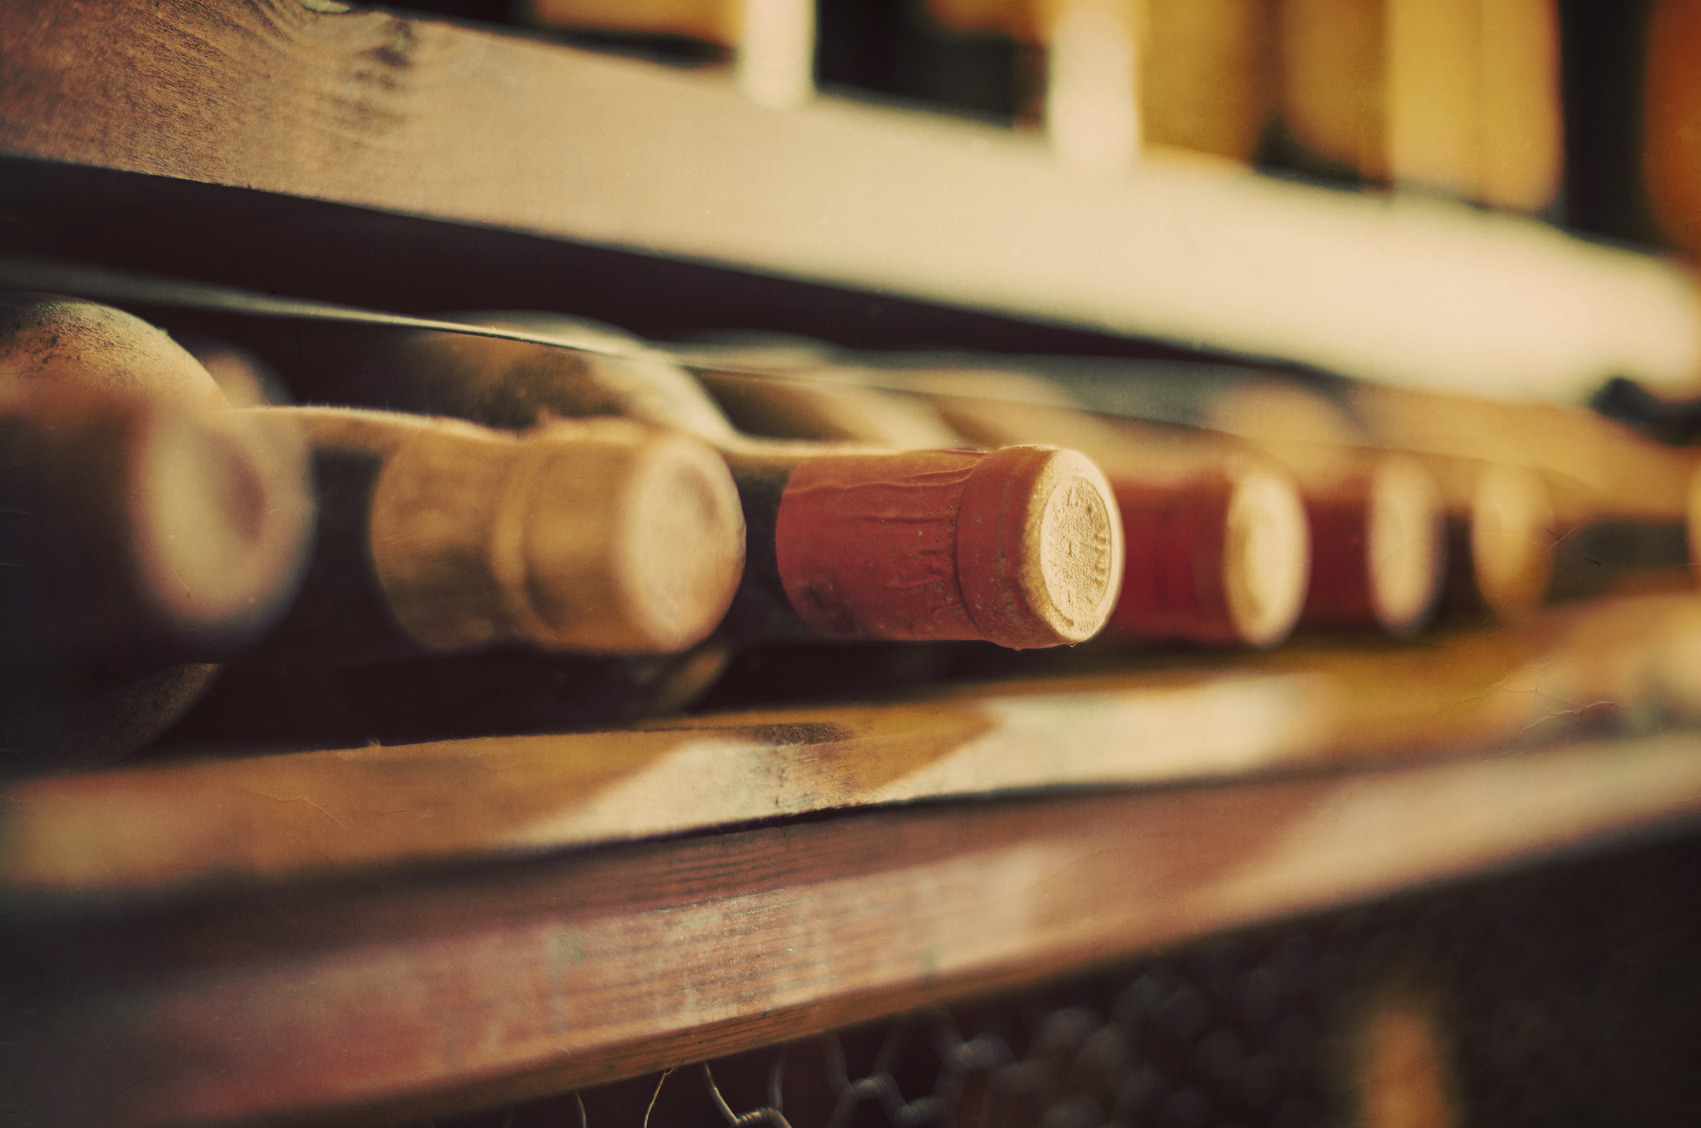 Wine bottles stacked on wooden racks. Vintage effect.